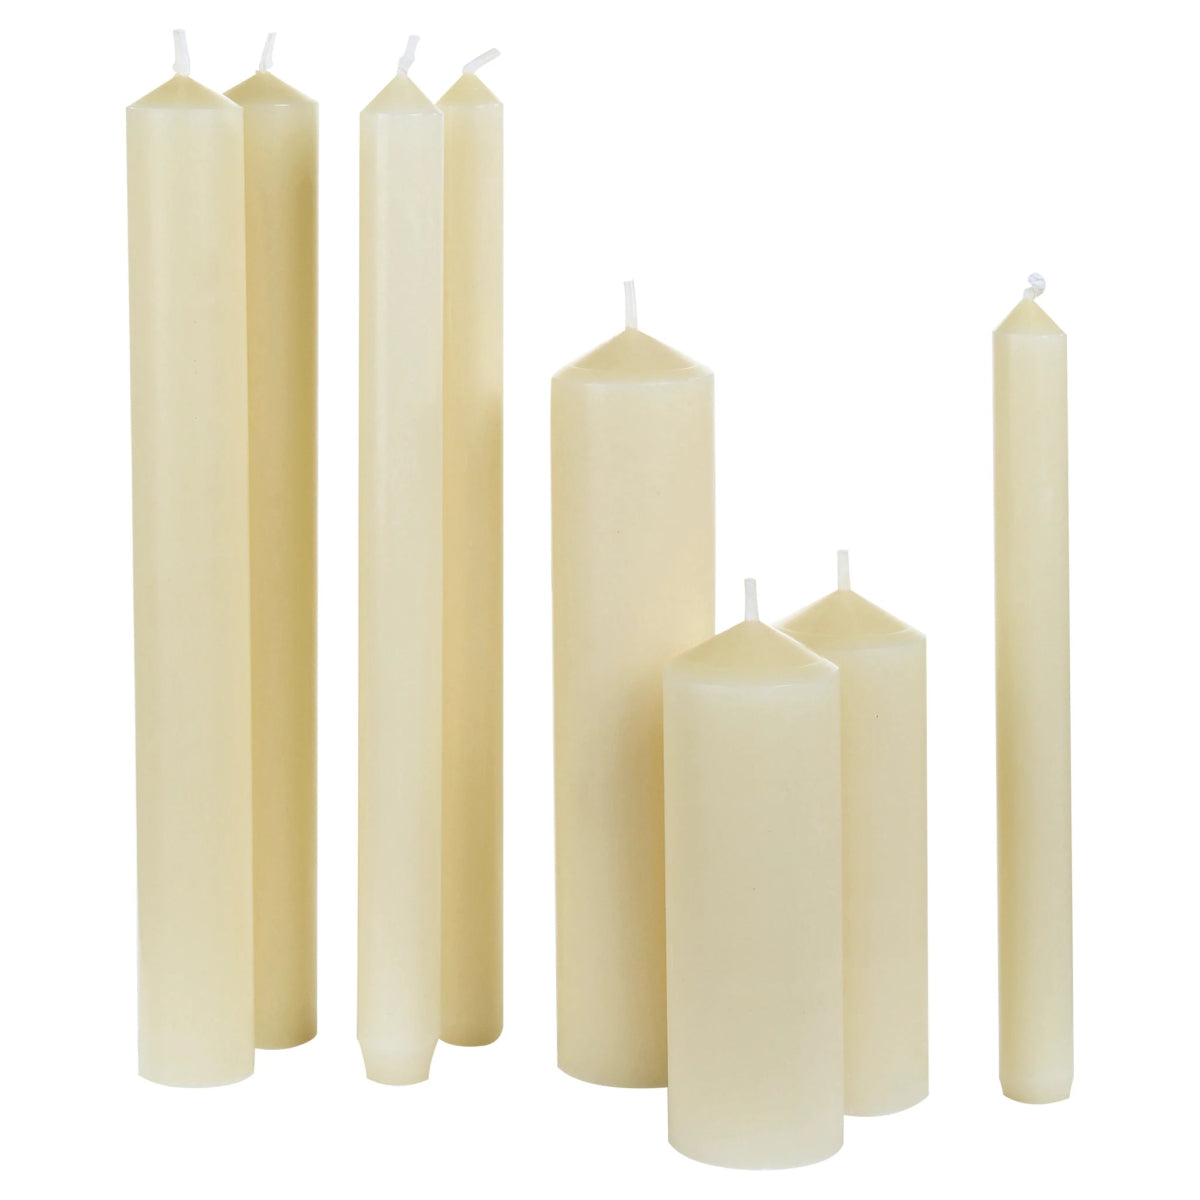 Altar Candles